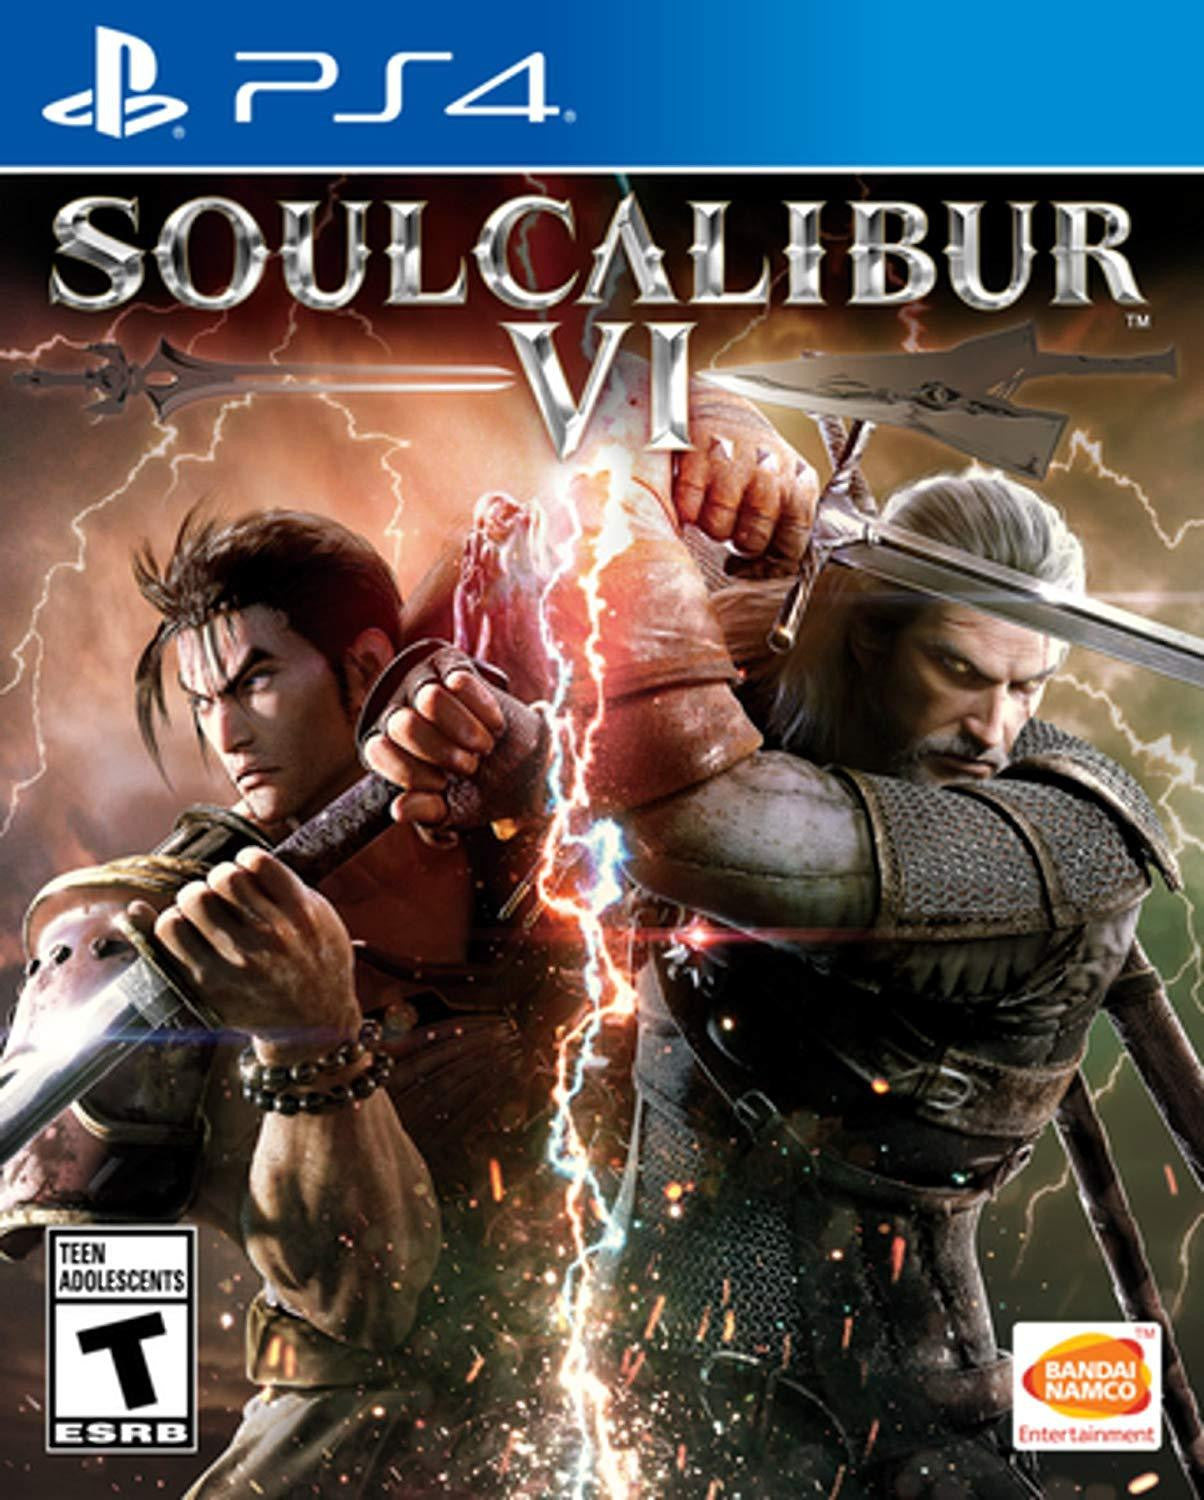 SoulCalibur VI - PlayStation 4